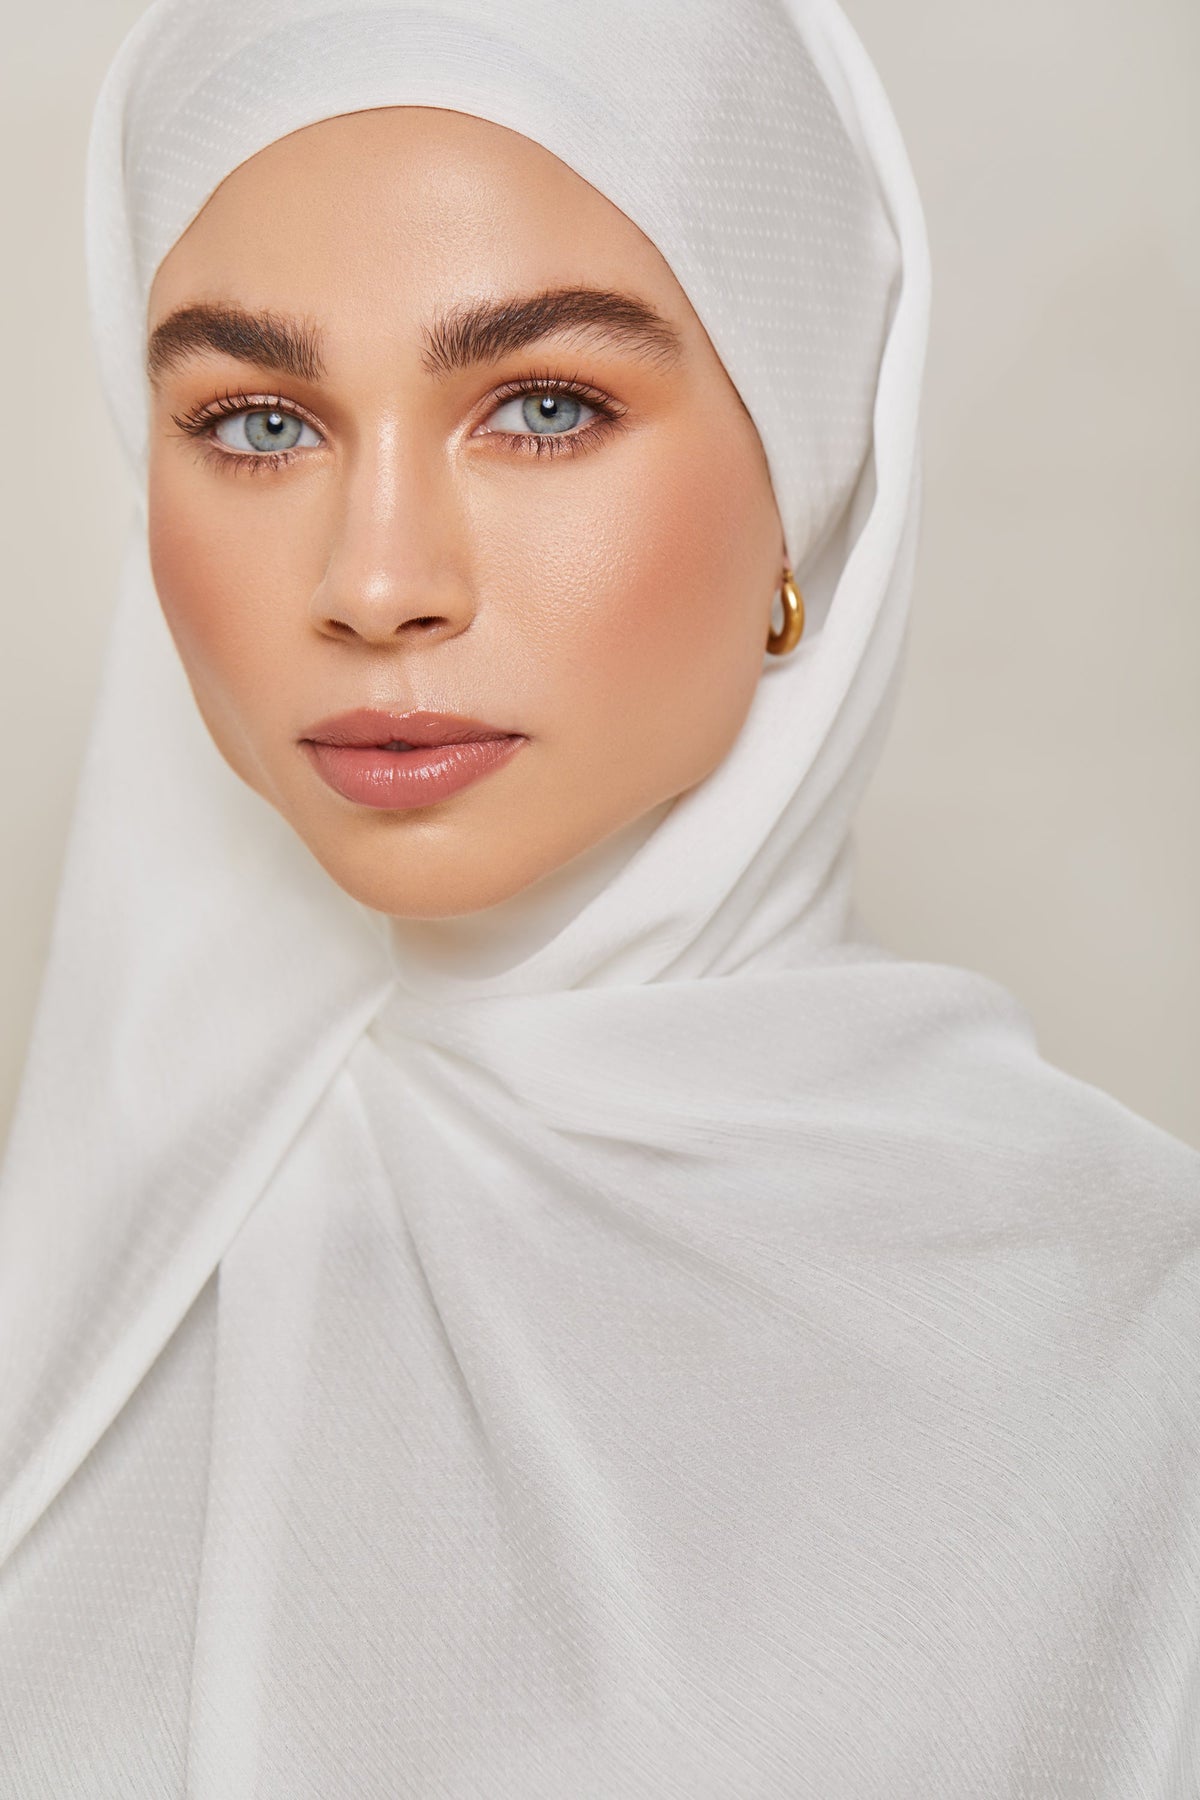 TEXTURE Crepe Hijab - White Dots epschoolboard 